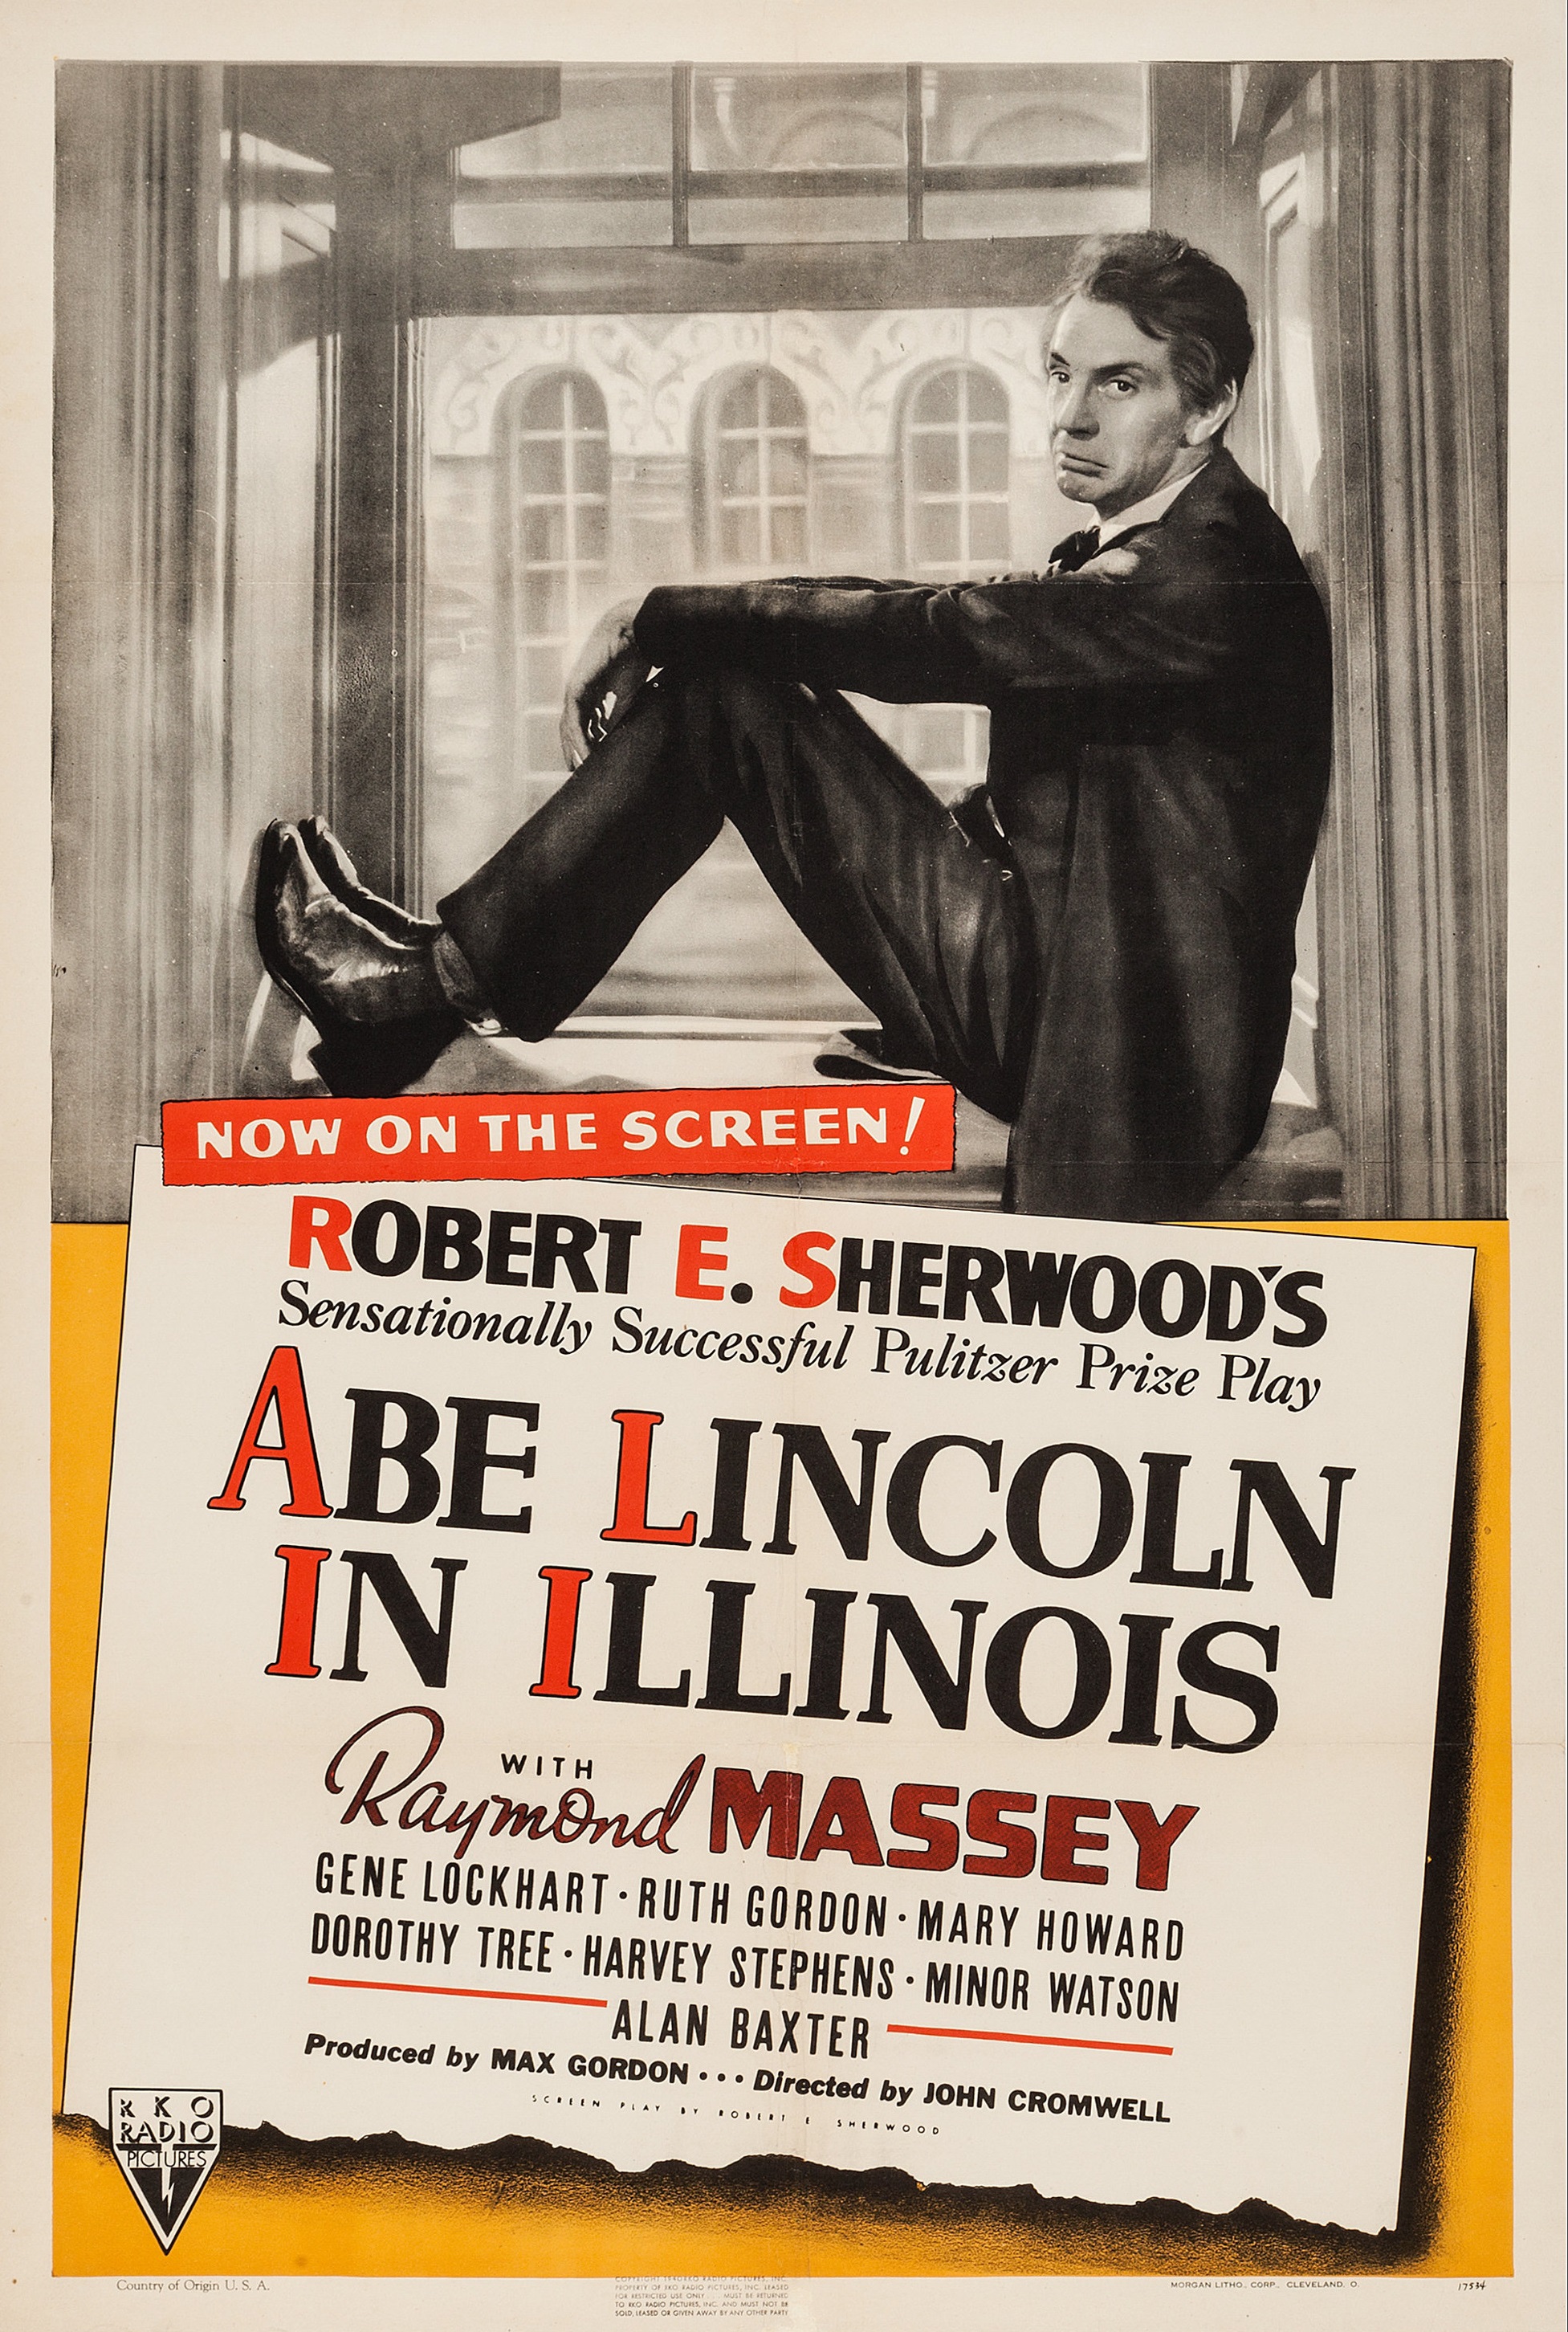 Film: "Abe Lincoln in Illinois"